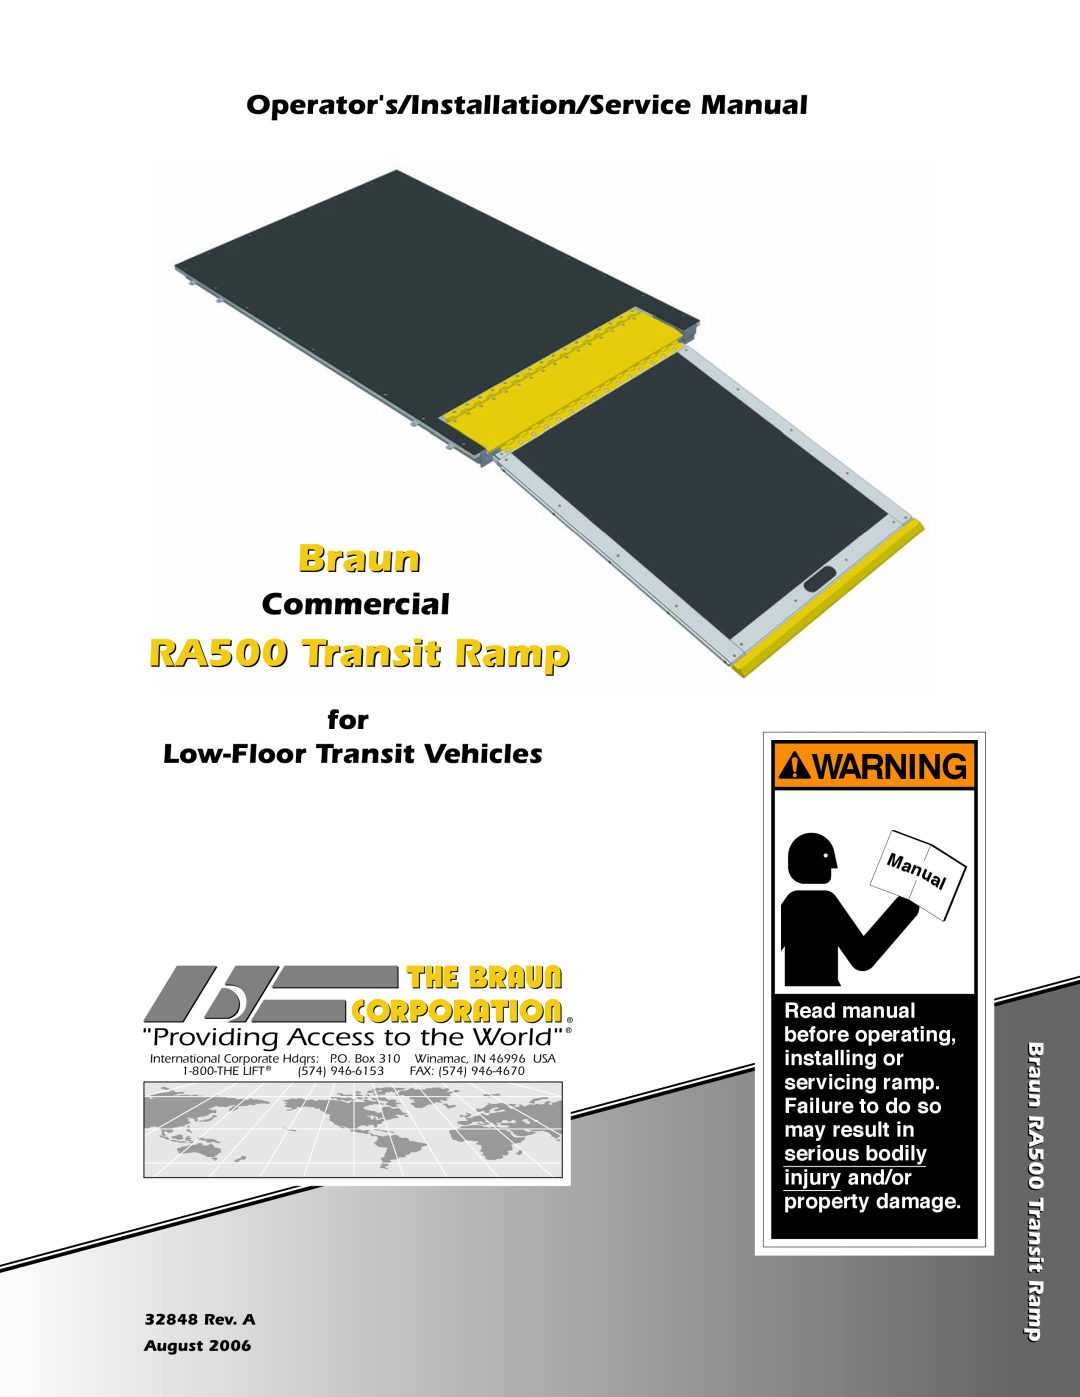 Braun service manual Providing Access to the World, Braun, RA500 Transit Ramp, Commercial, Read manual, Winamac, IN 